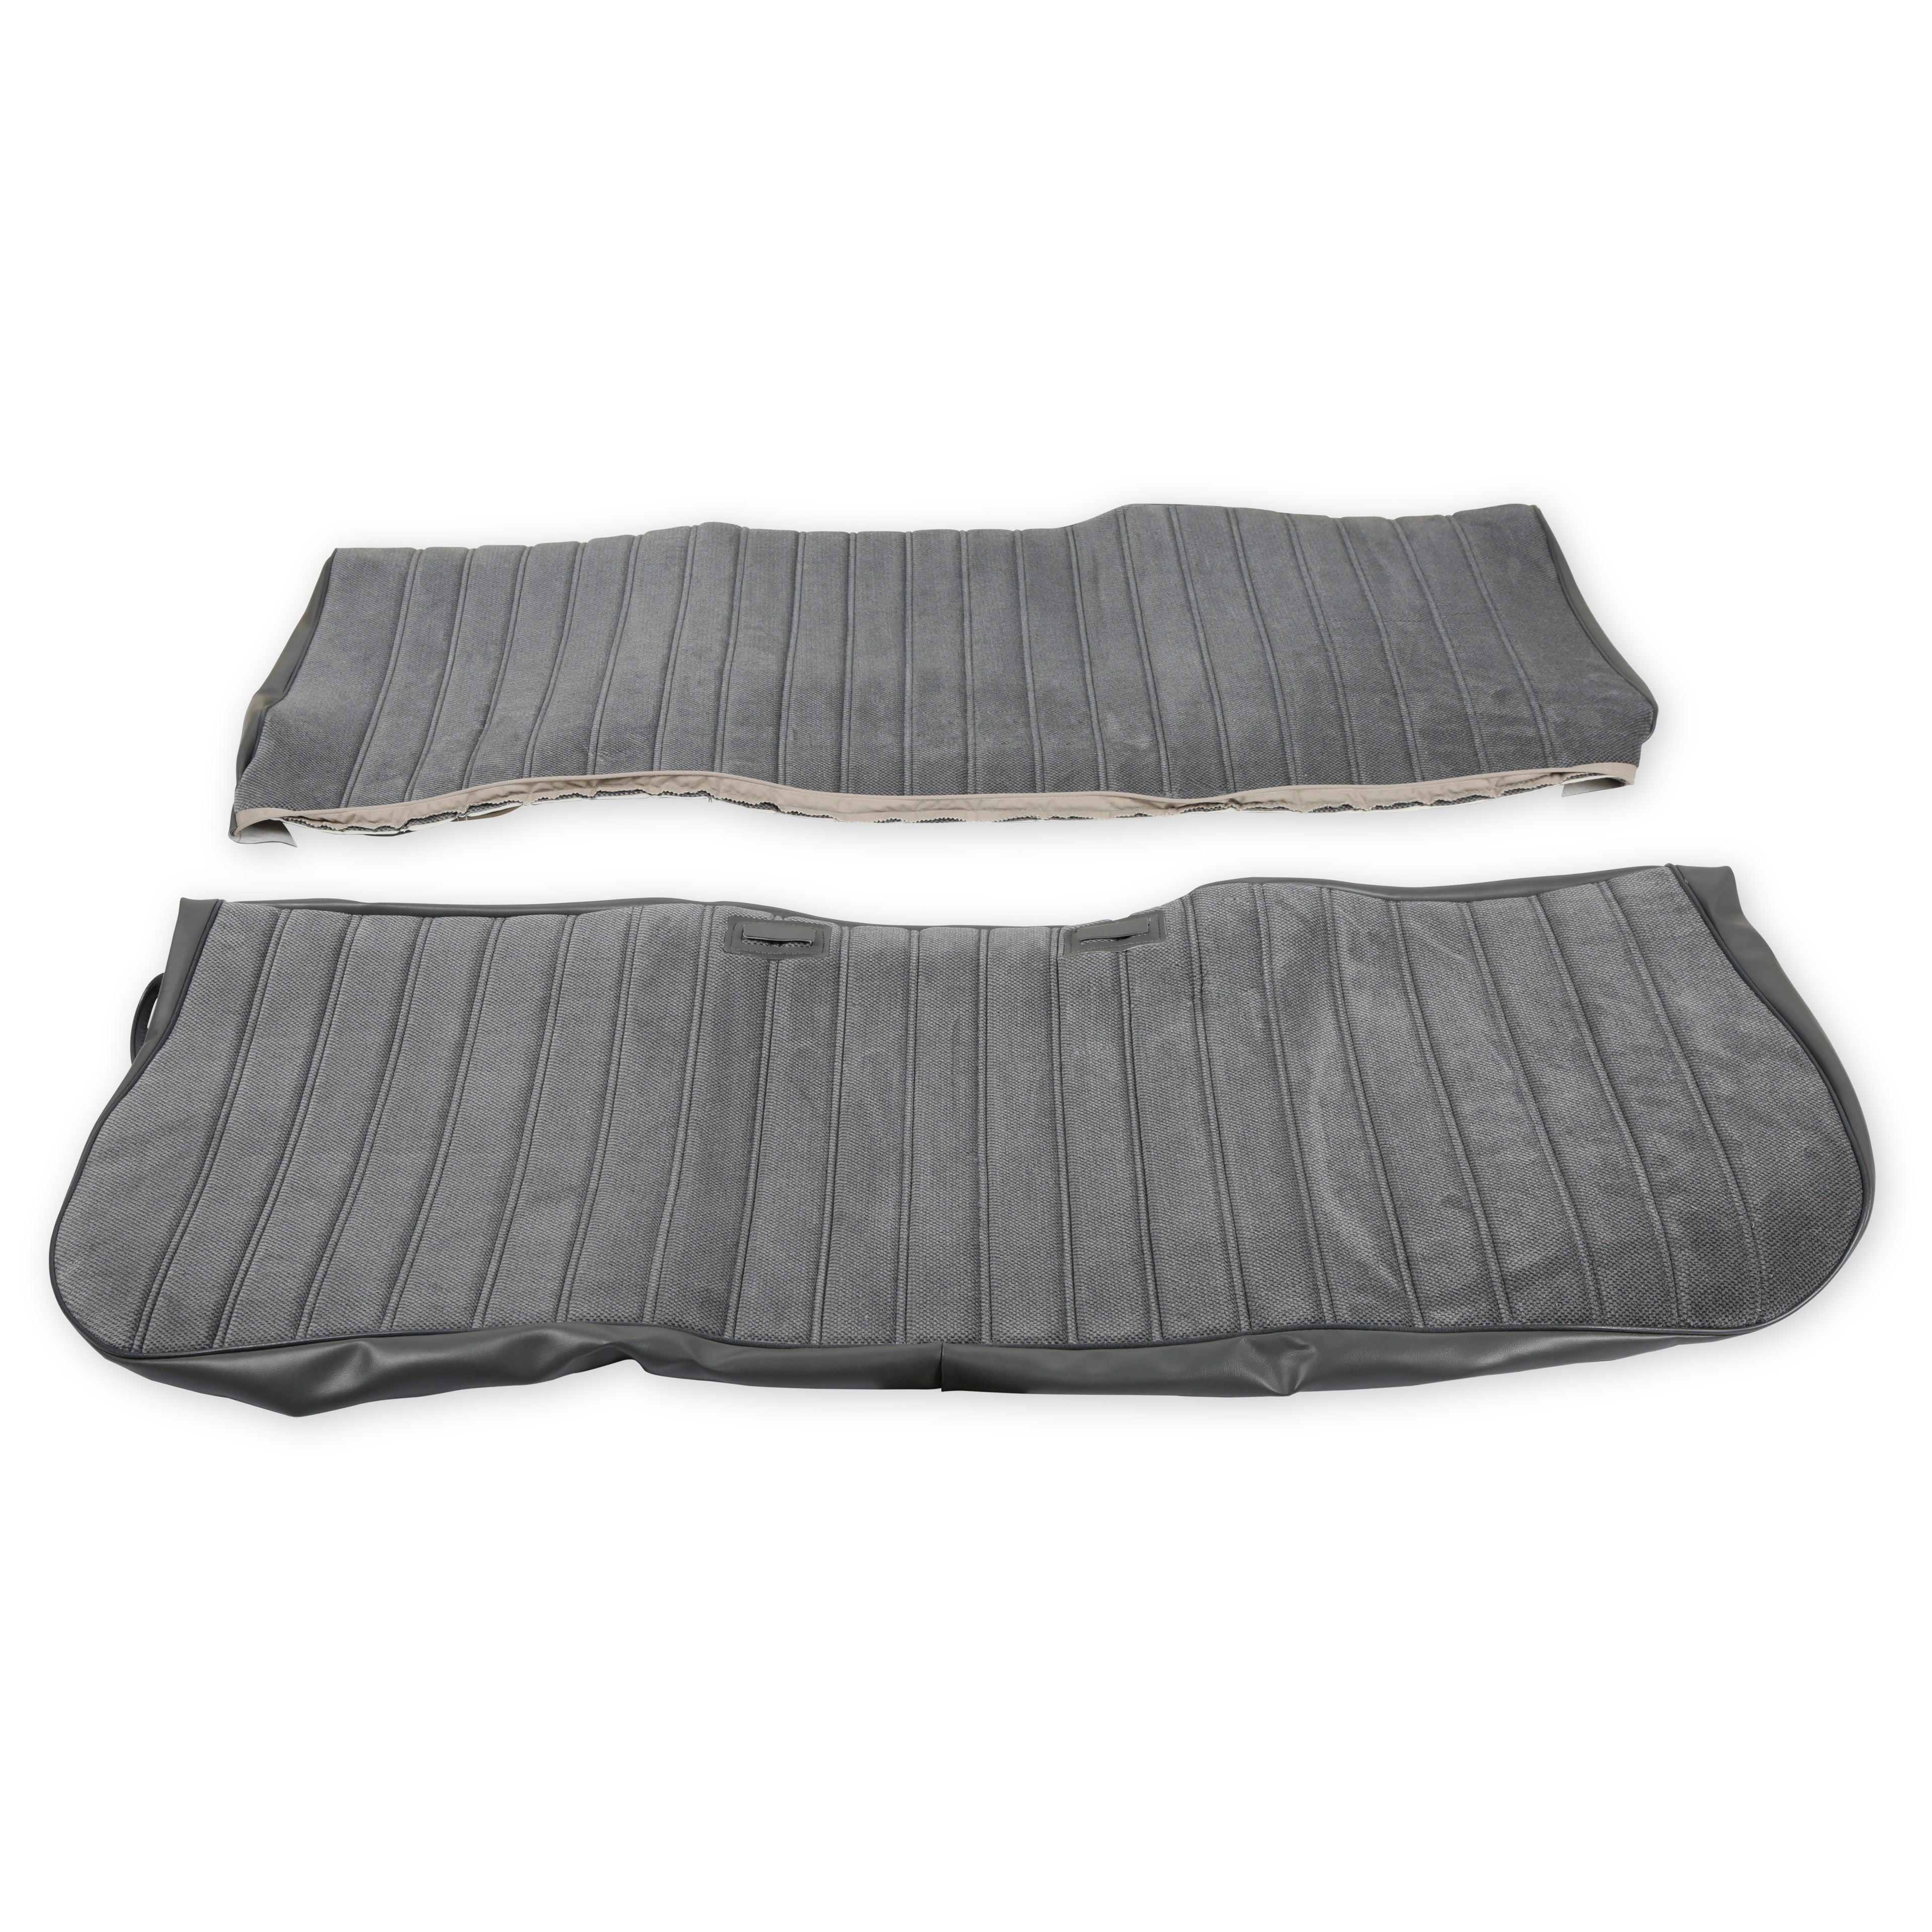 BROTHERS C/K Seat Upholstery Kit - Full Pleat Cloth/Vinyl - Grey/Charcoal pn 05-299